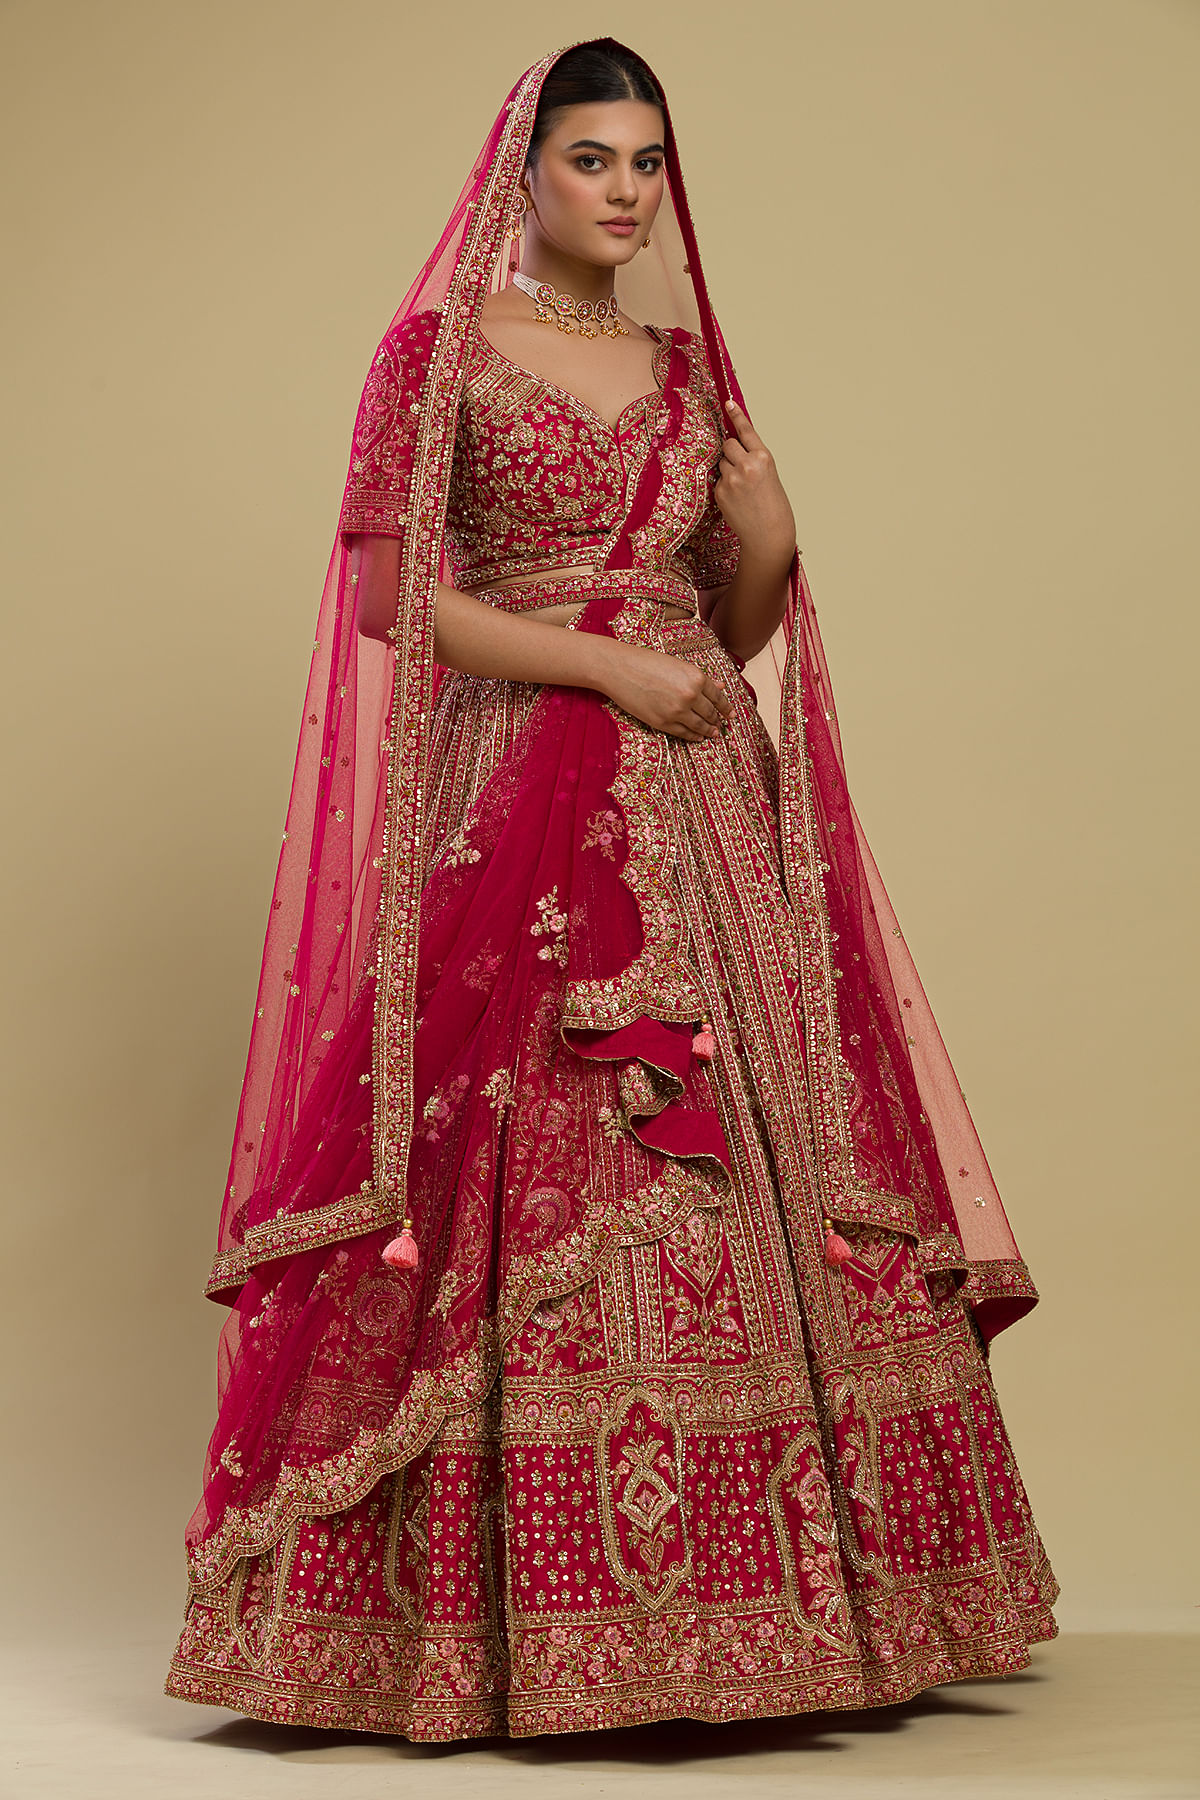 Royal Red Bridal Lehenga - Stunning Wedding Design